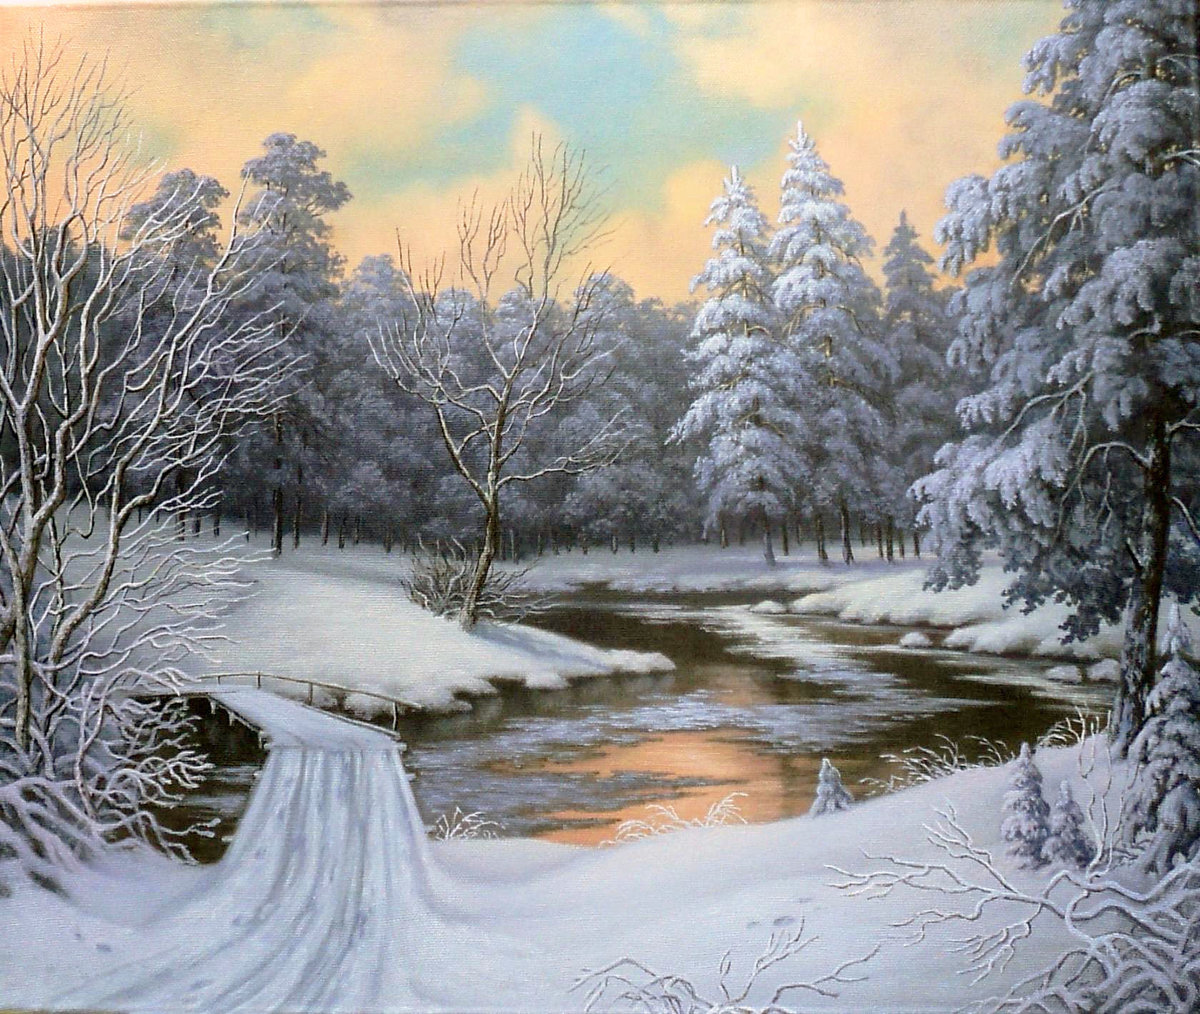 Худ. Воронкин Сергей - пейзаж зима, вода, снег, природа - оригинал